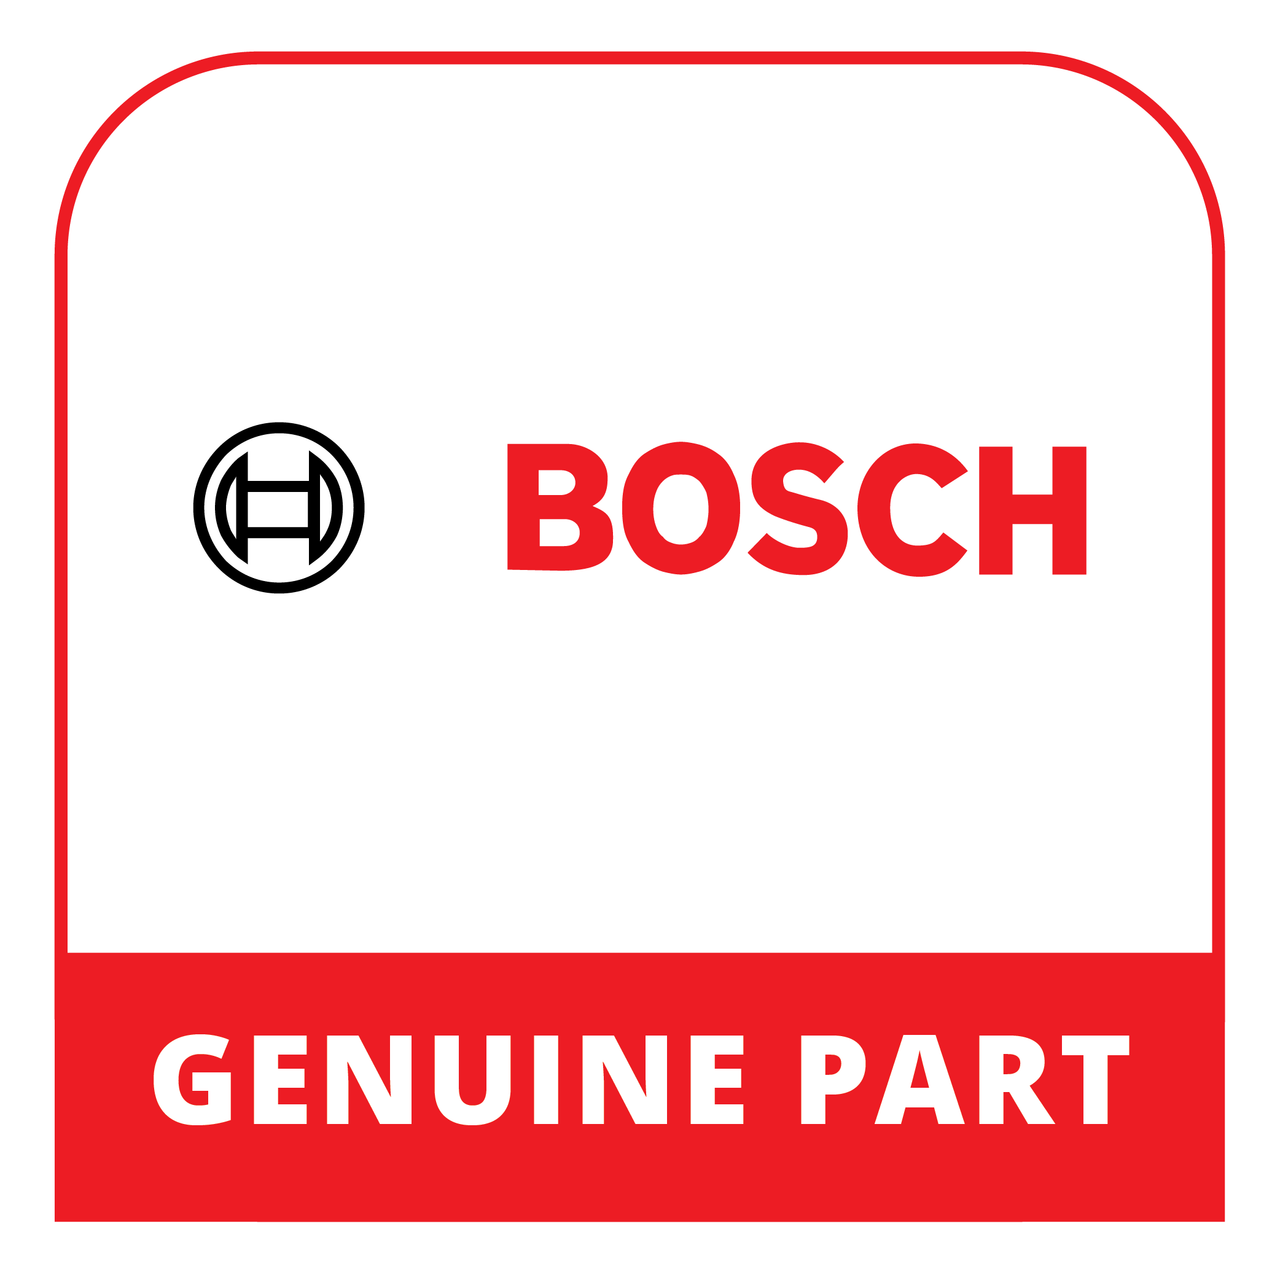 Bosch 00422740 - Glass Light Cover - Genuine Bosch (Thermador) Part